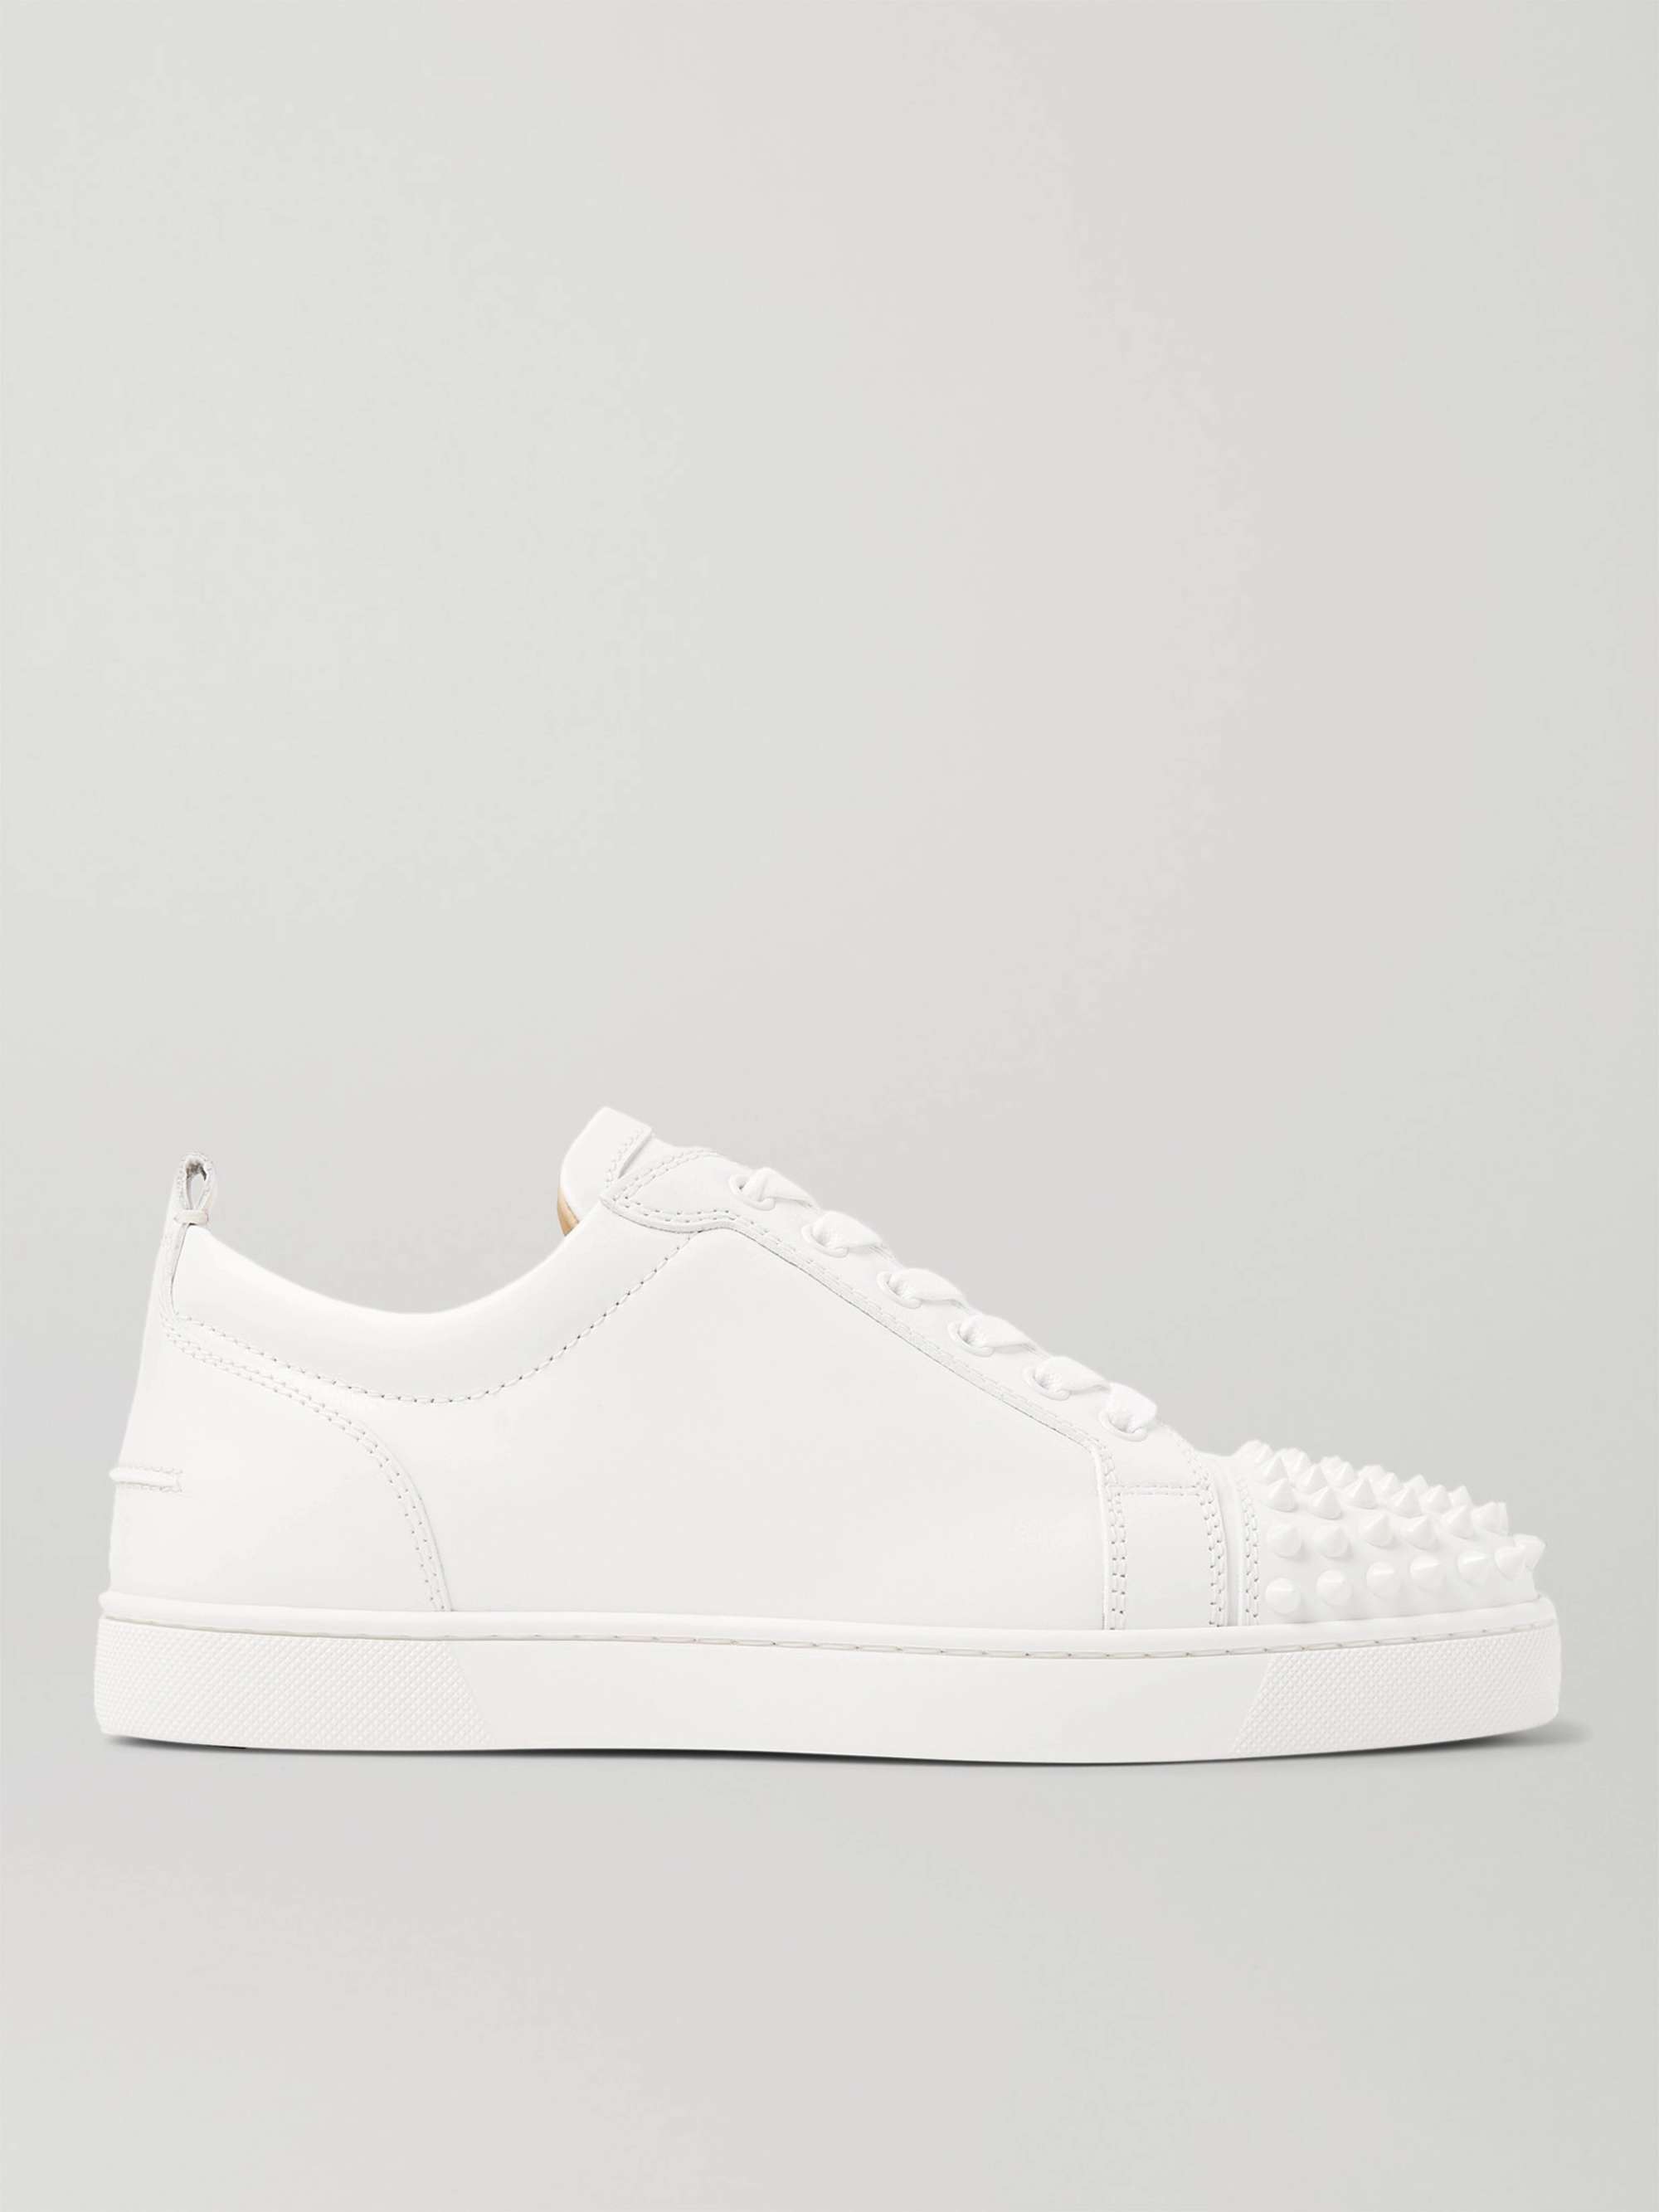 Christian Louboutin - Men - Louis Junior Spikes Cap-Toe Leather Sneakers White - EU 43